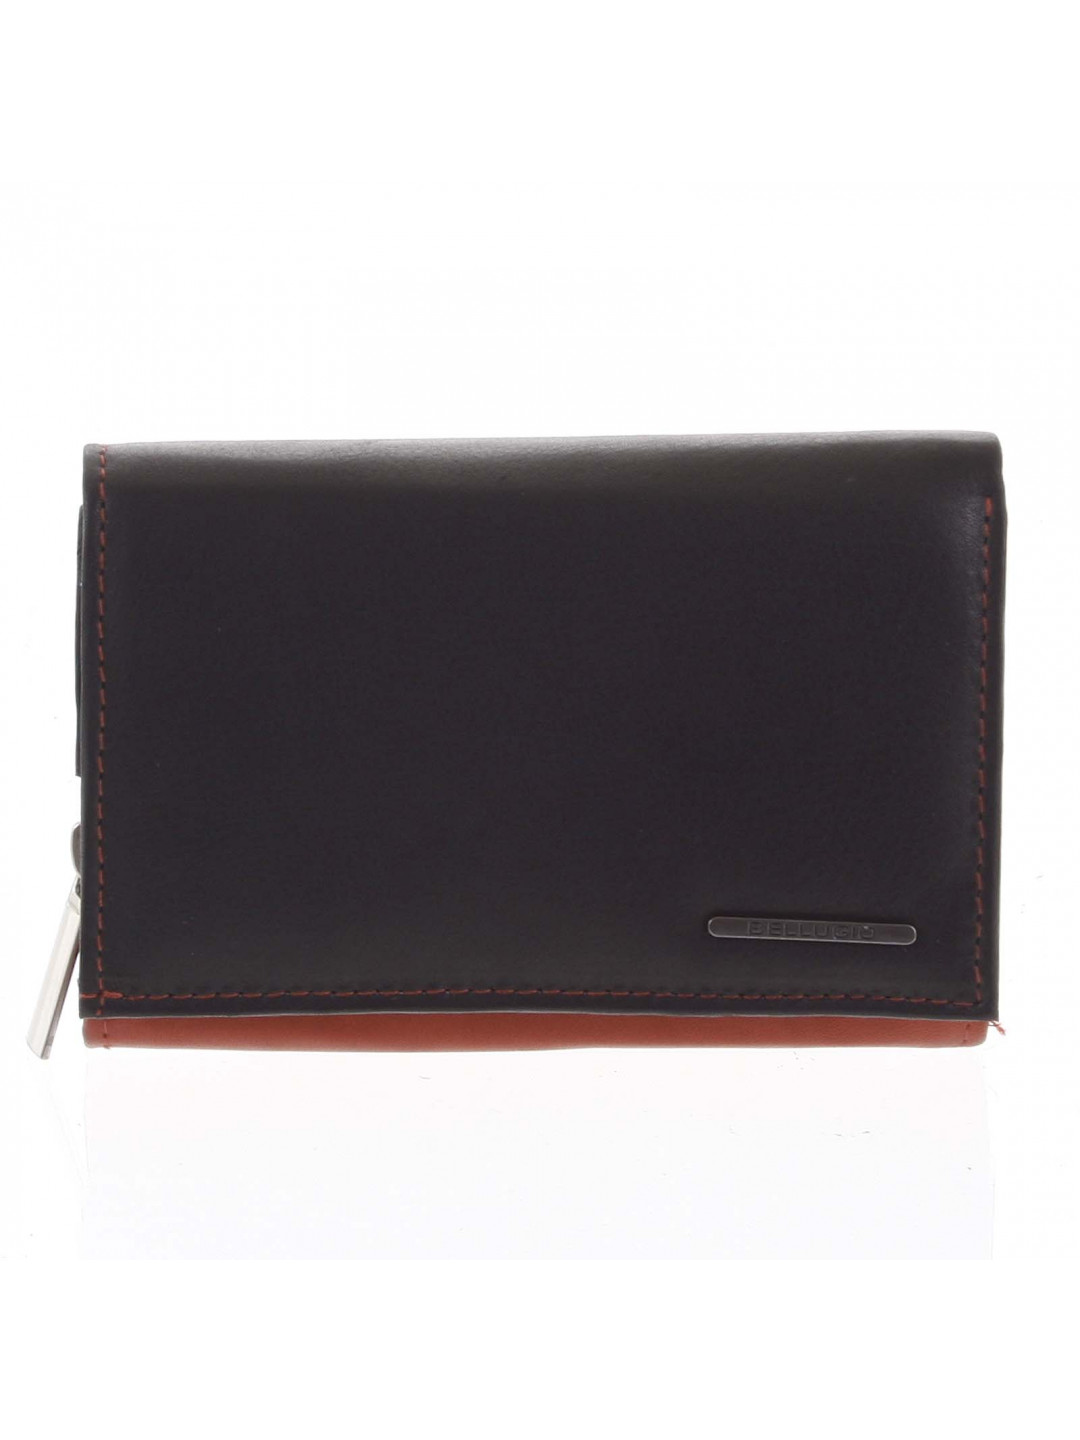 Dámská kožená peněženka červeno černá – Bellugio Averi New